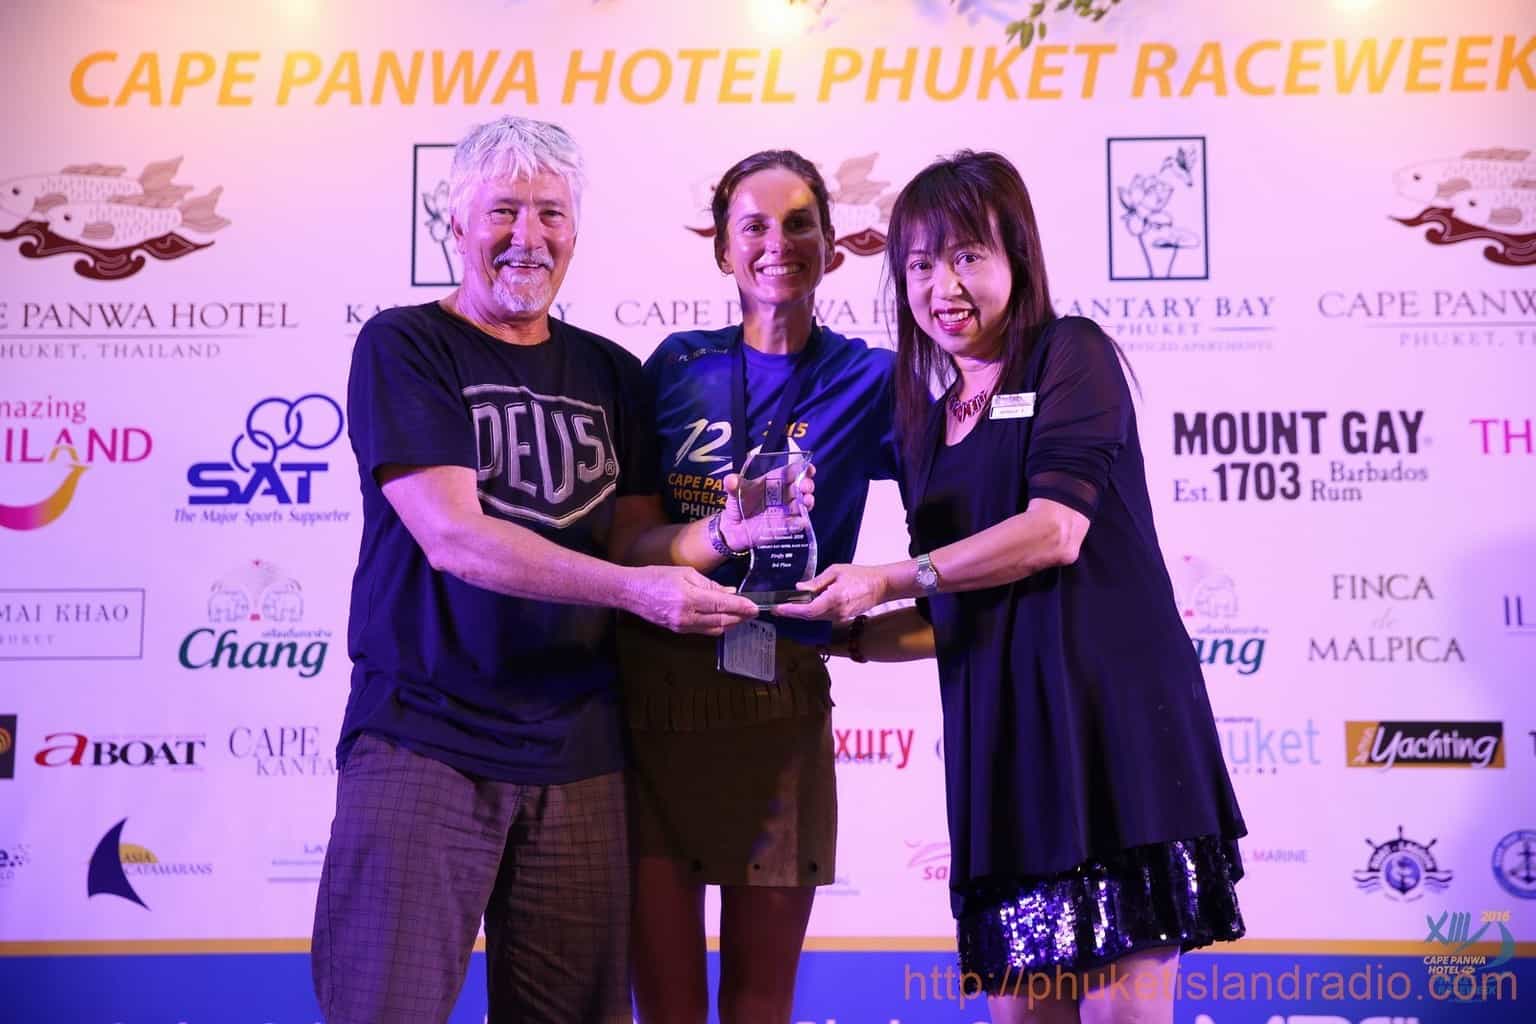 Raceday-two-awards-presented-by-Kantary-Bay-Hotel-Phuket181